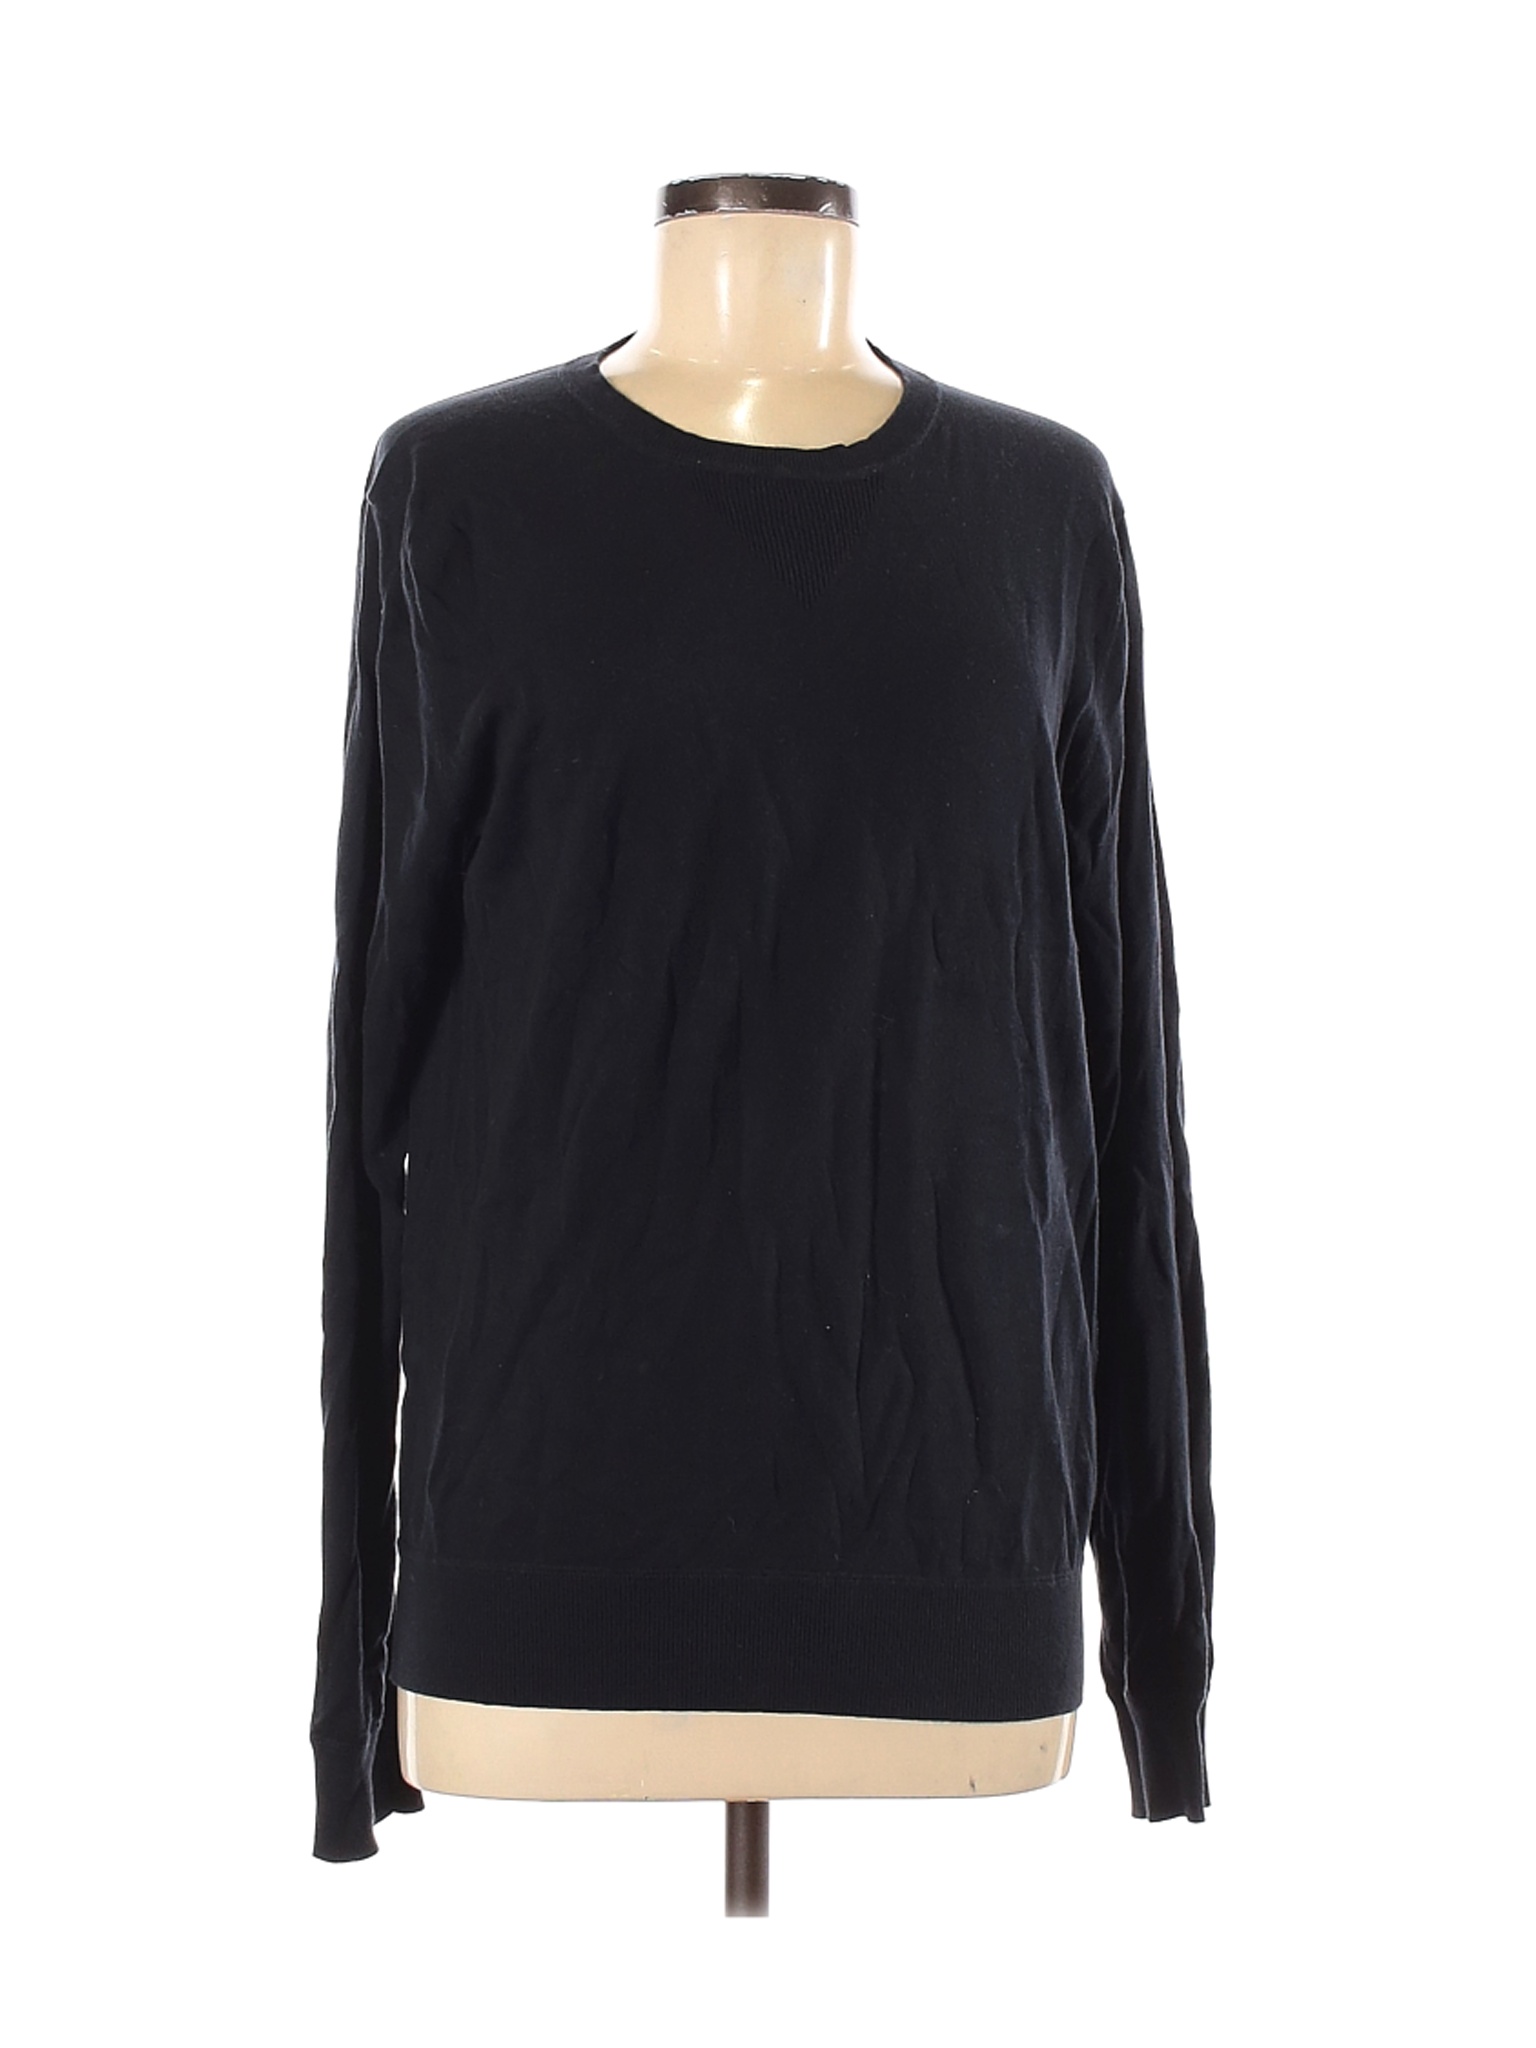 J.Lindeberg Women Black Pullover Sweater M | eBay